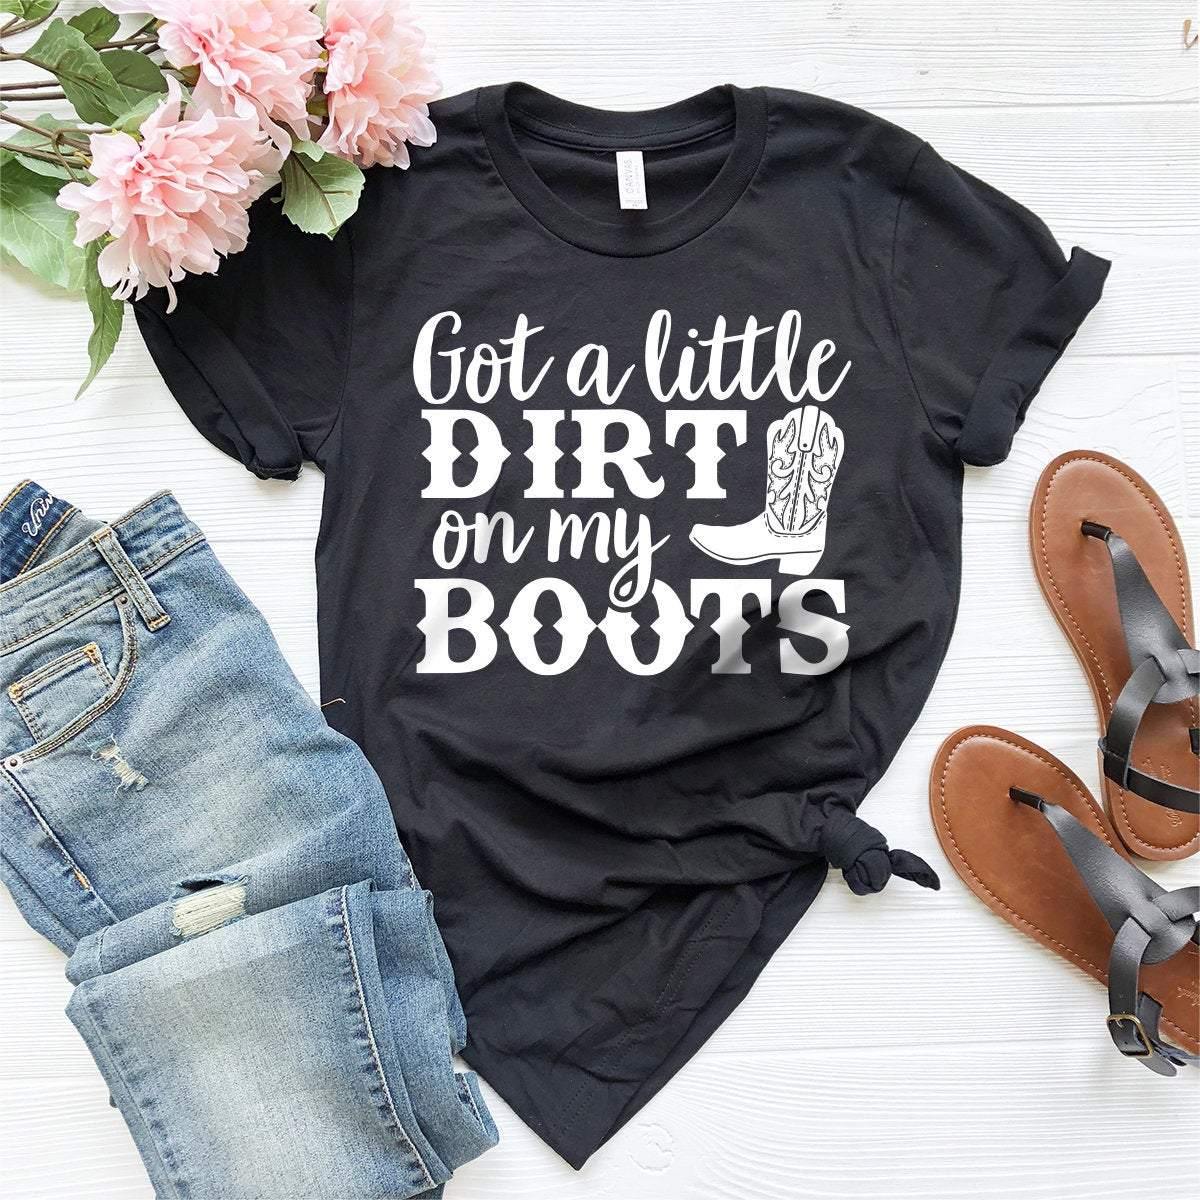 Country Girl Shirt, Cowgirl Boots Shirt, Southern Life Shirt, Western Girl Shirt, Southern Girl Shirt, Gotta A Little Dirt On My Boots Shirt - Fastdeliverytees.com